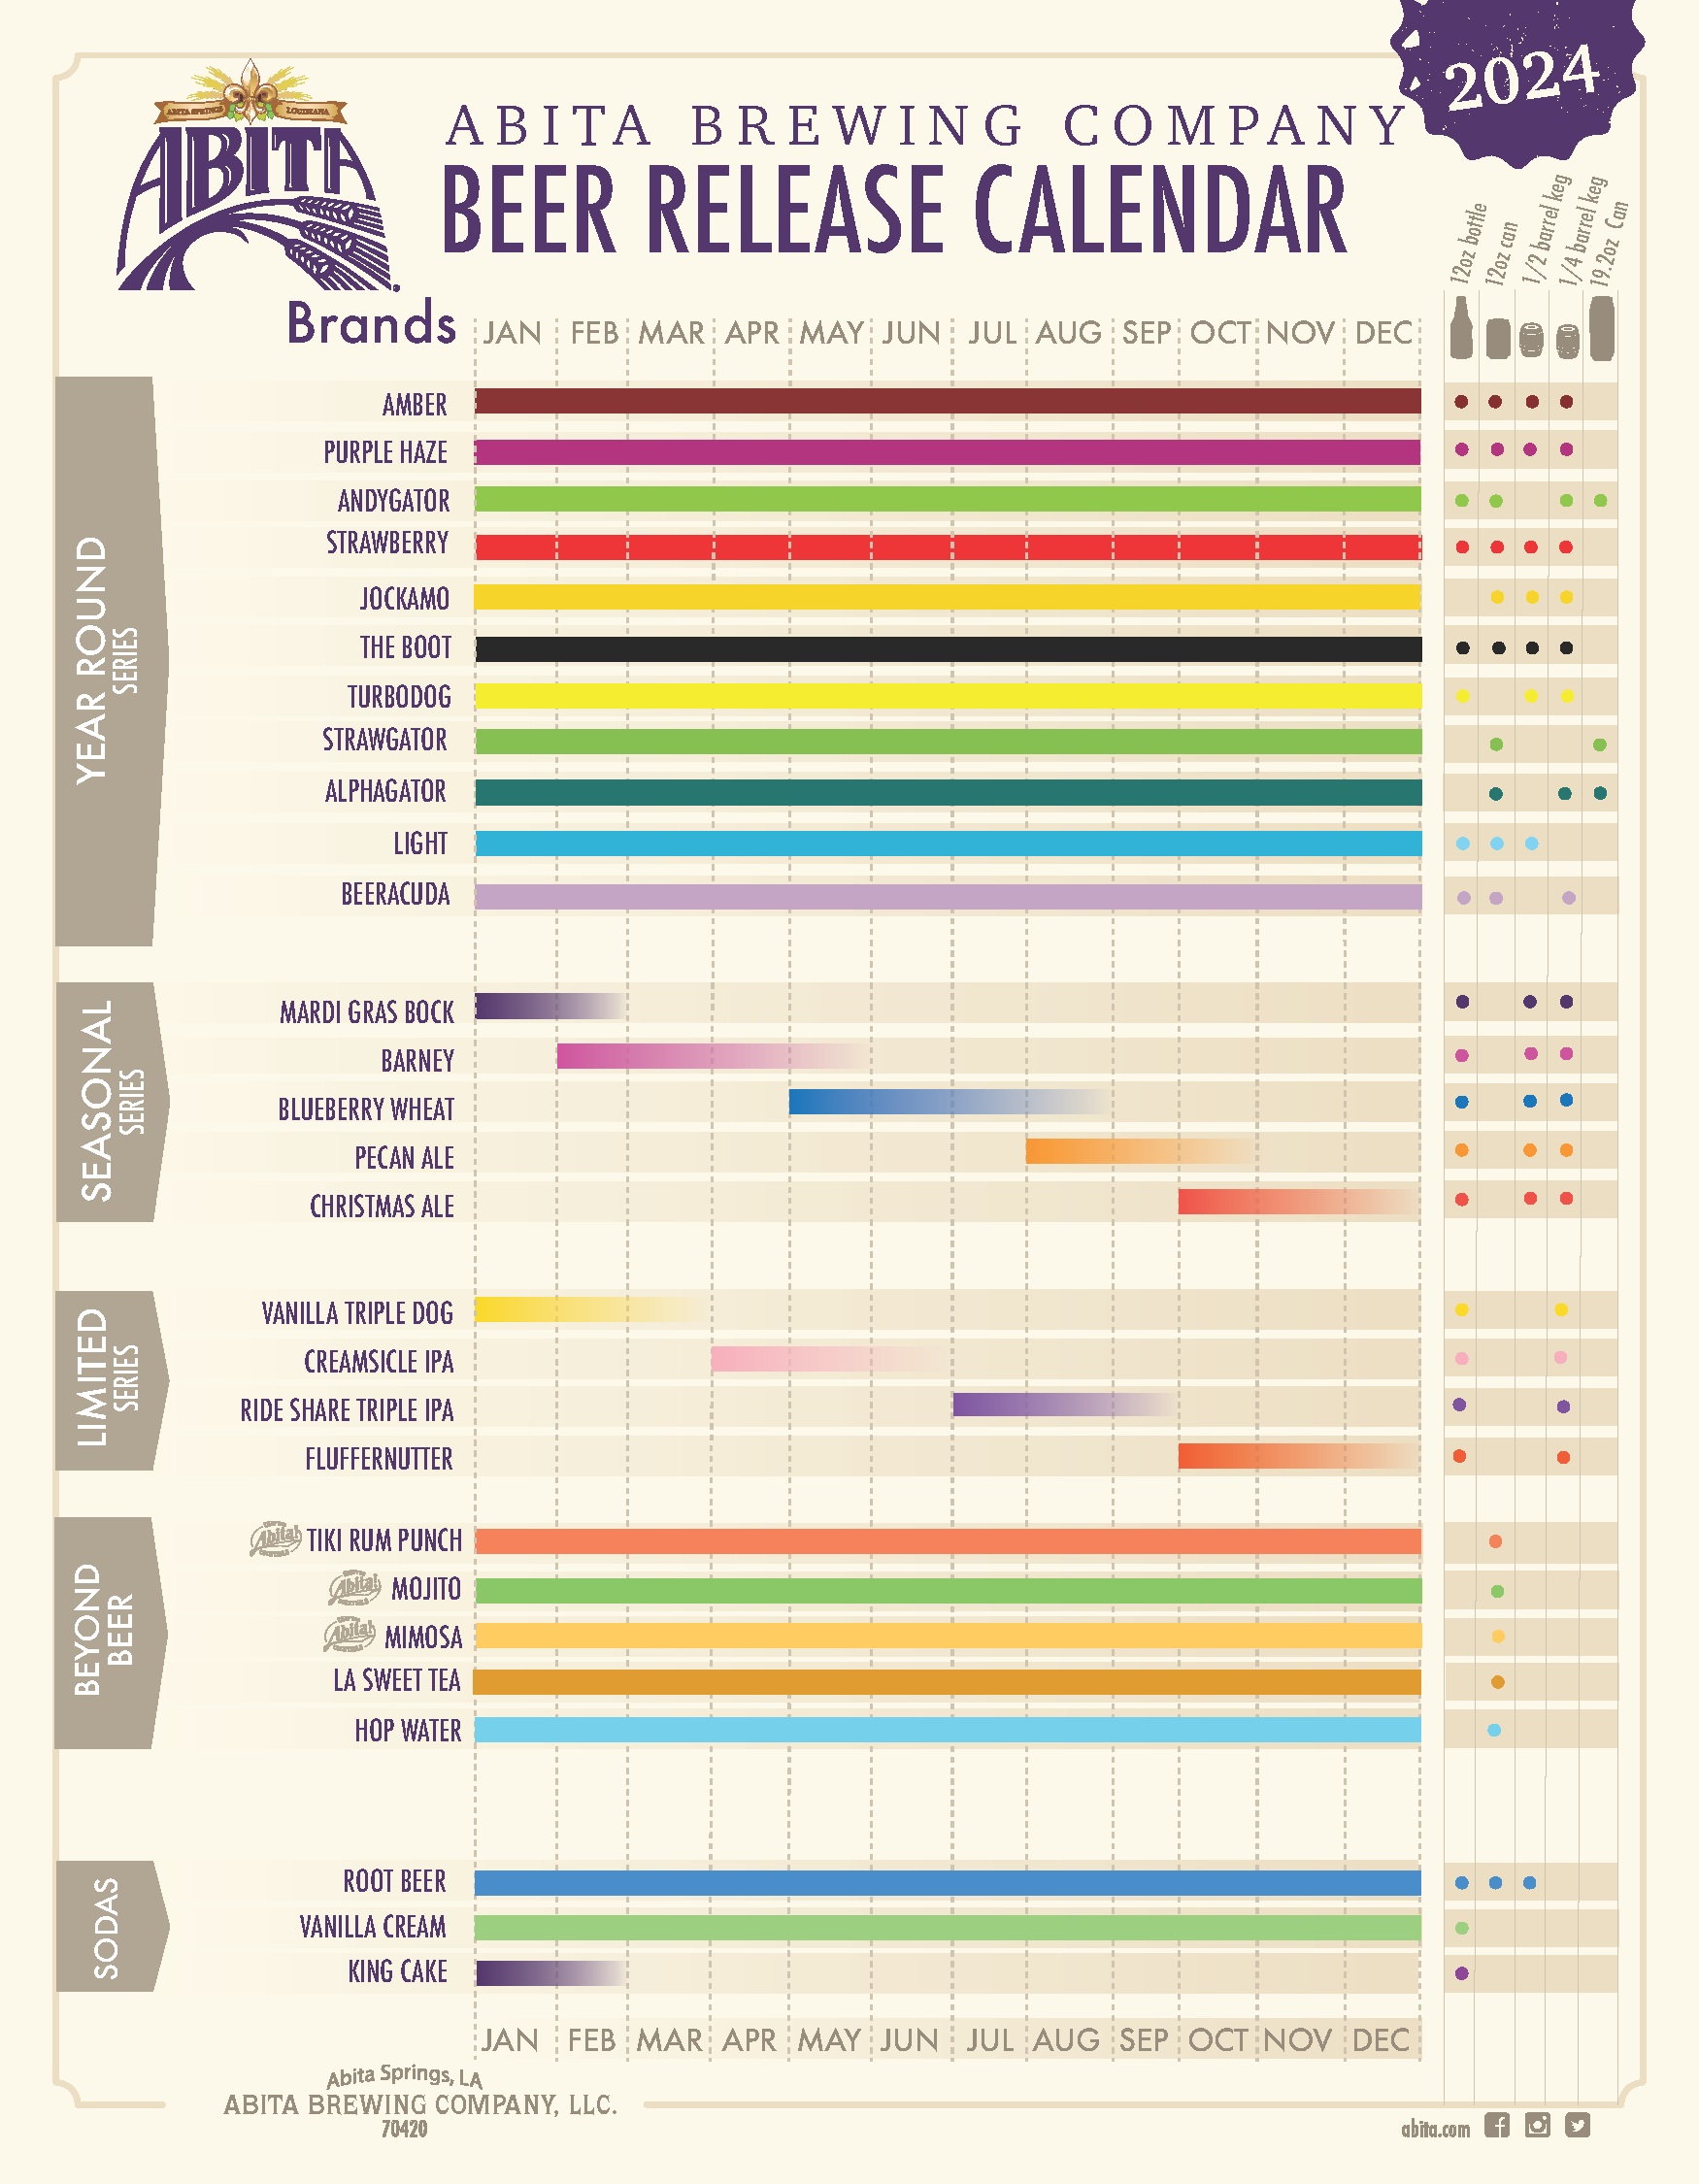 calendar layout of 2024 beer releases from abita beer